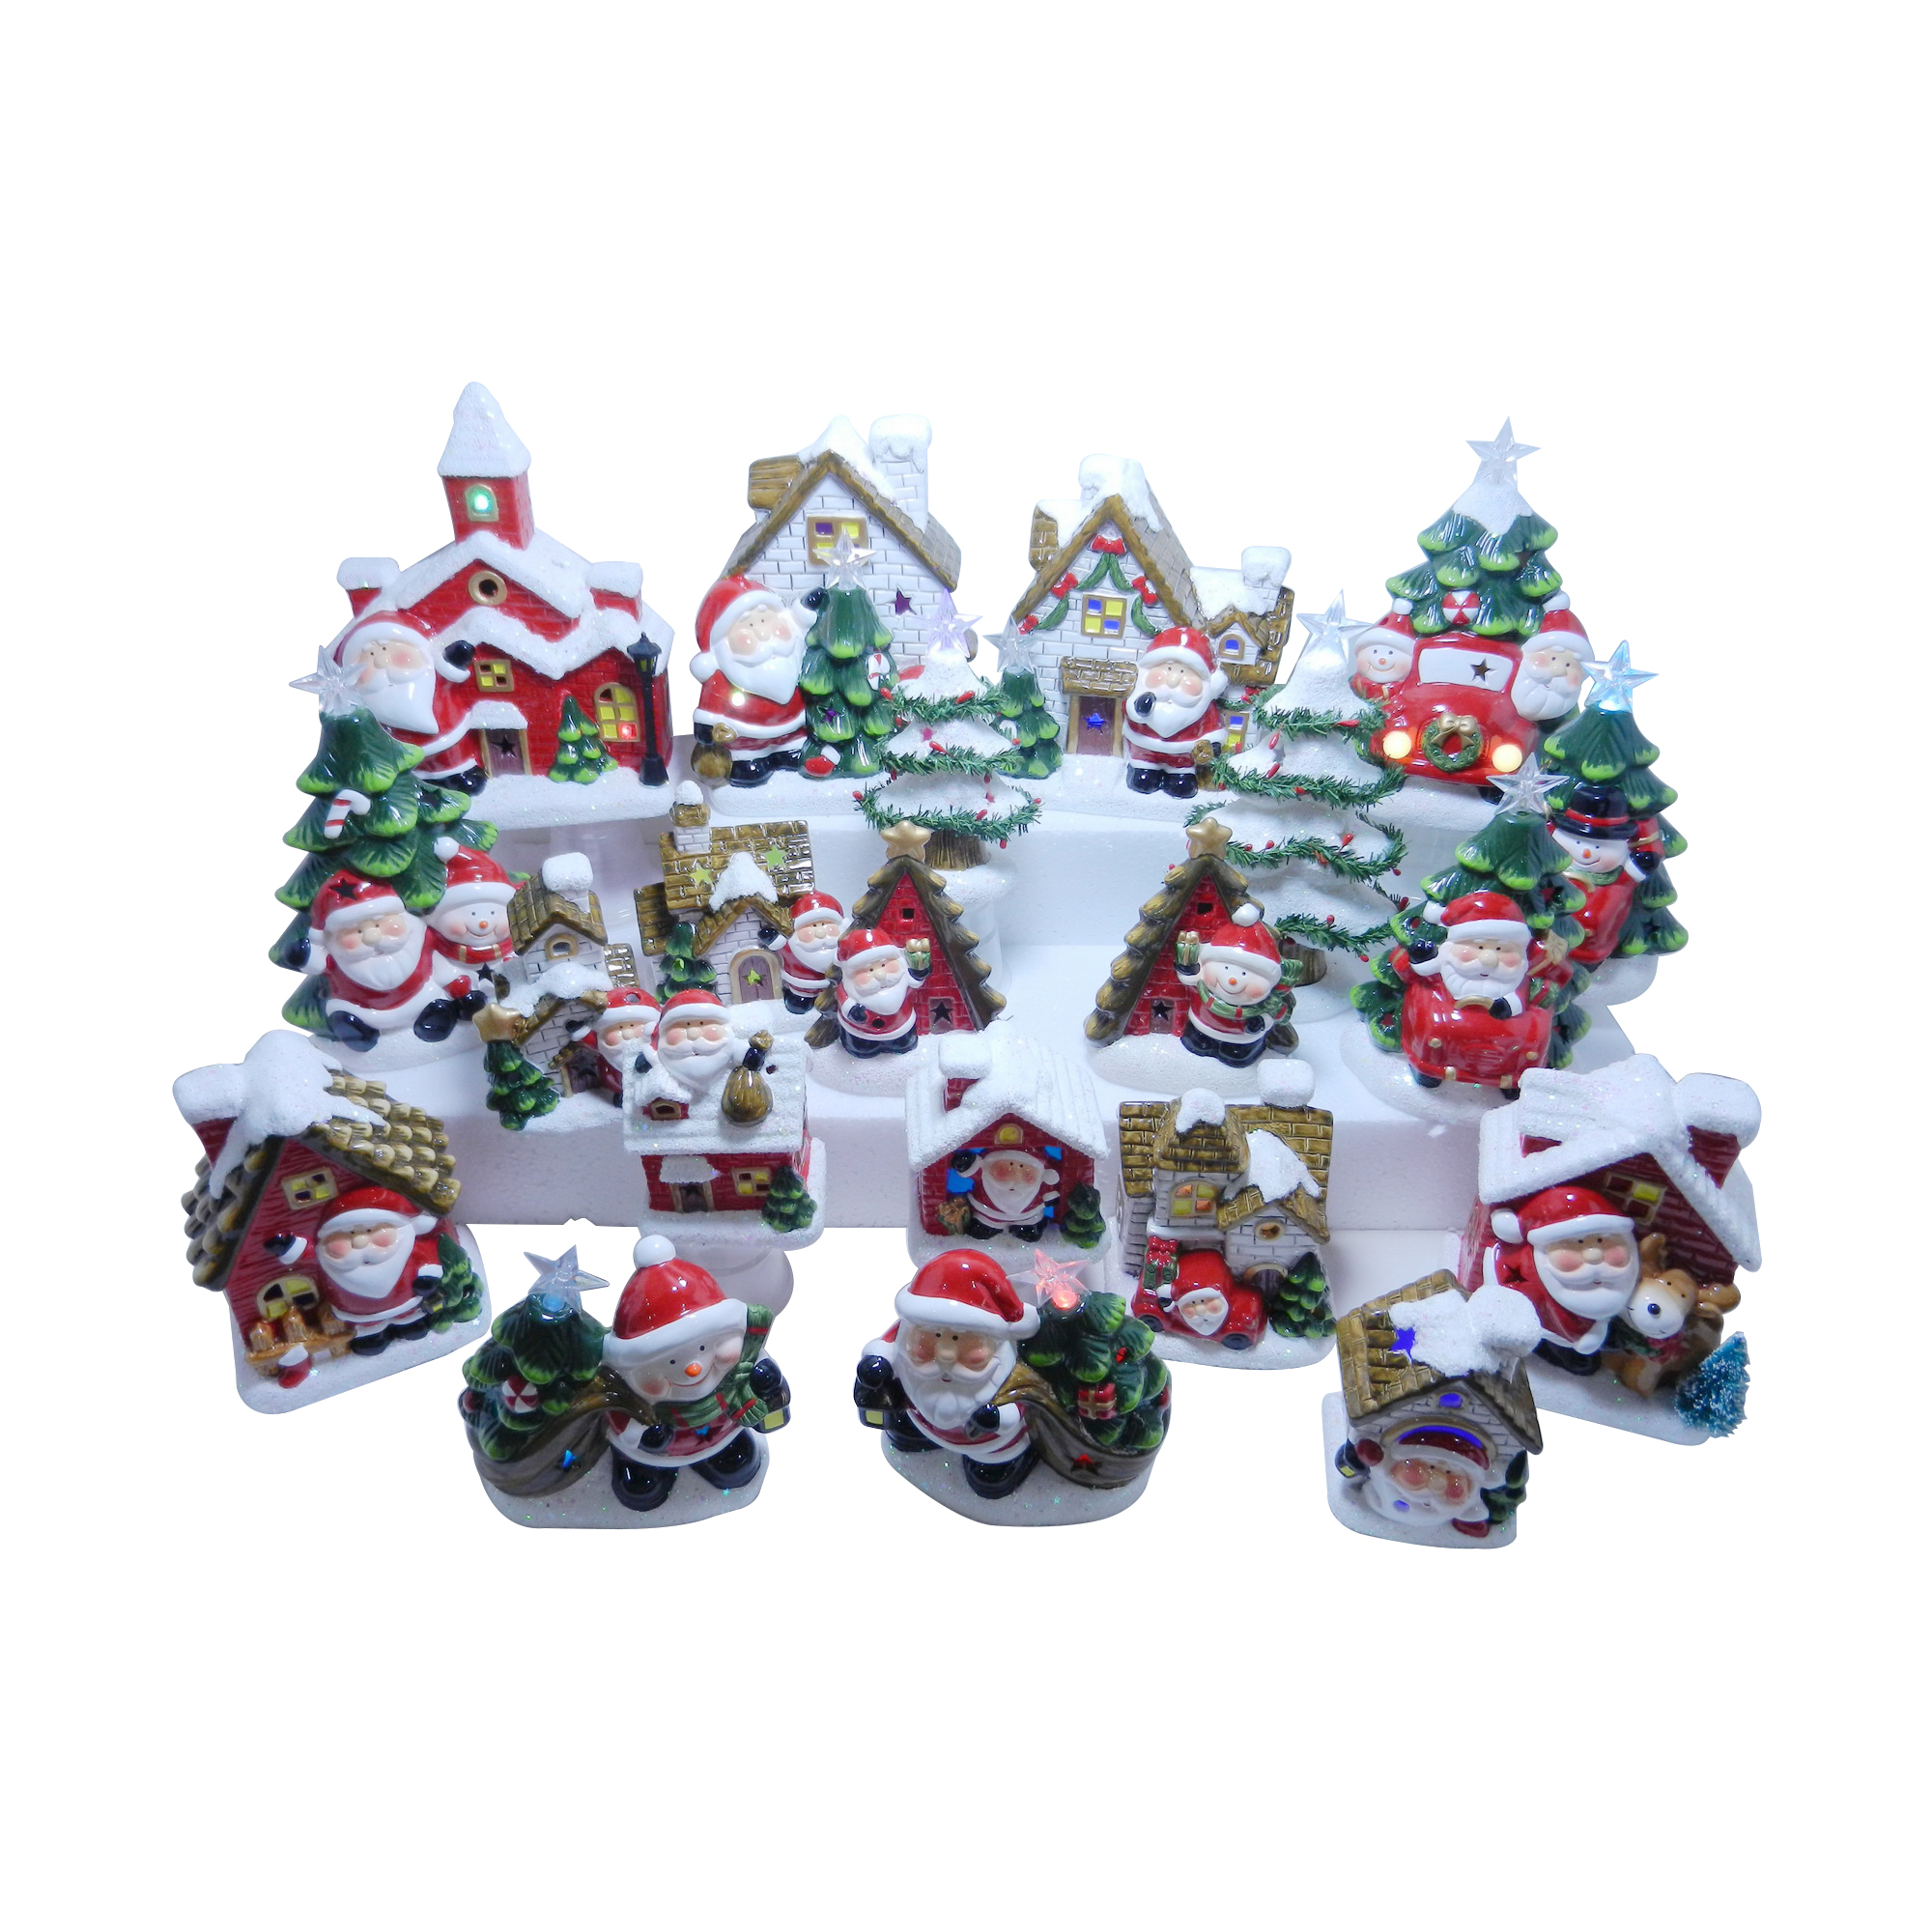 Ceramic Christmas figurines